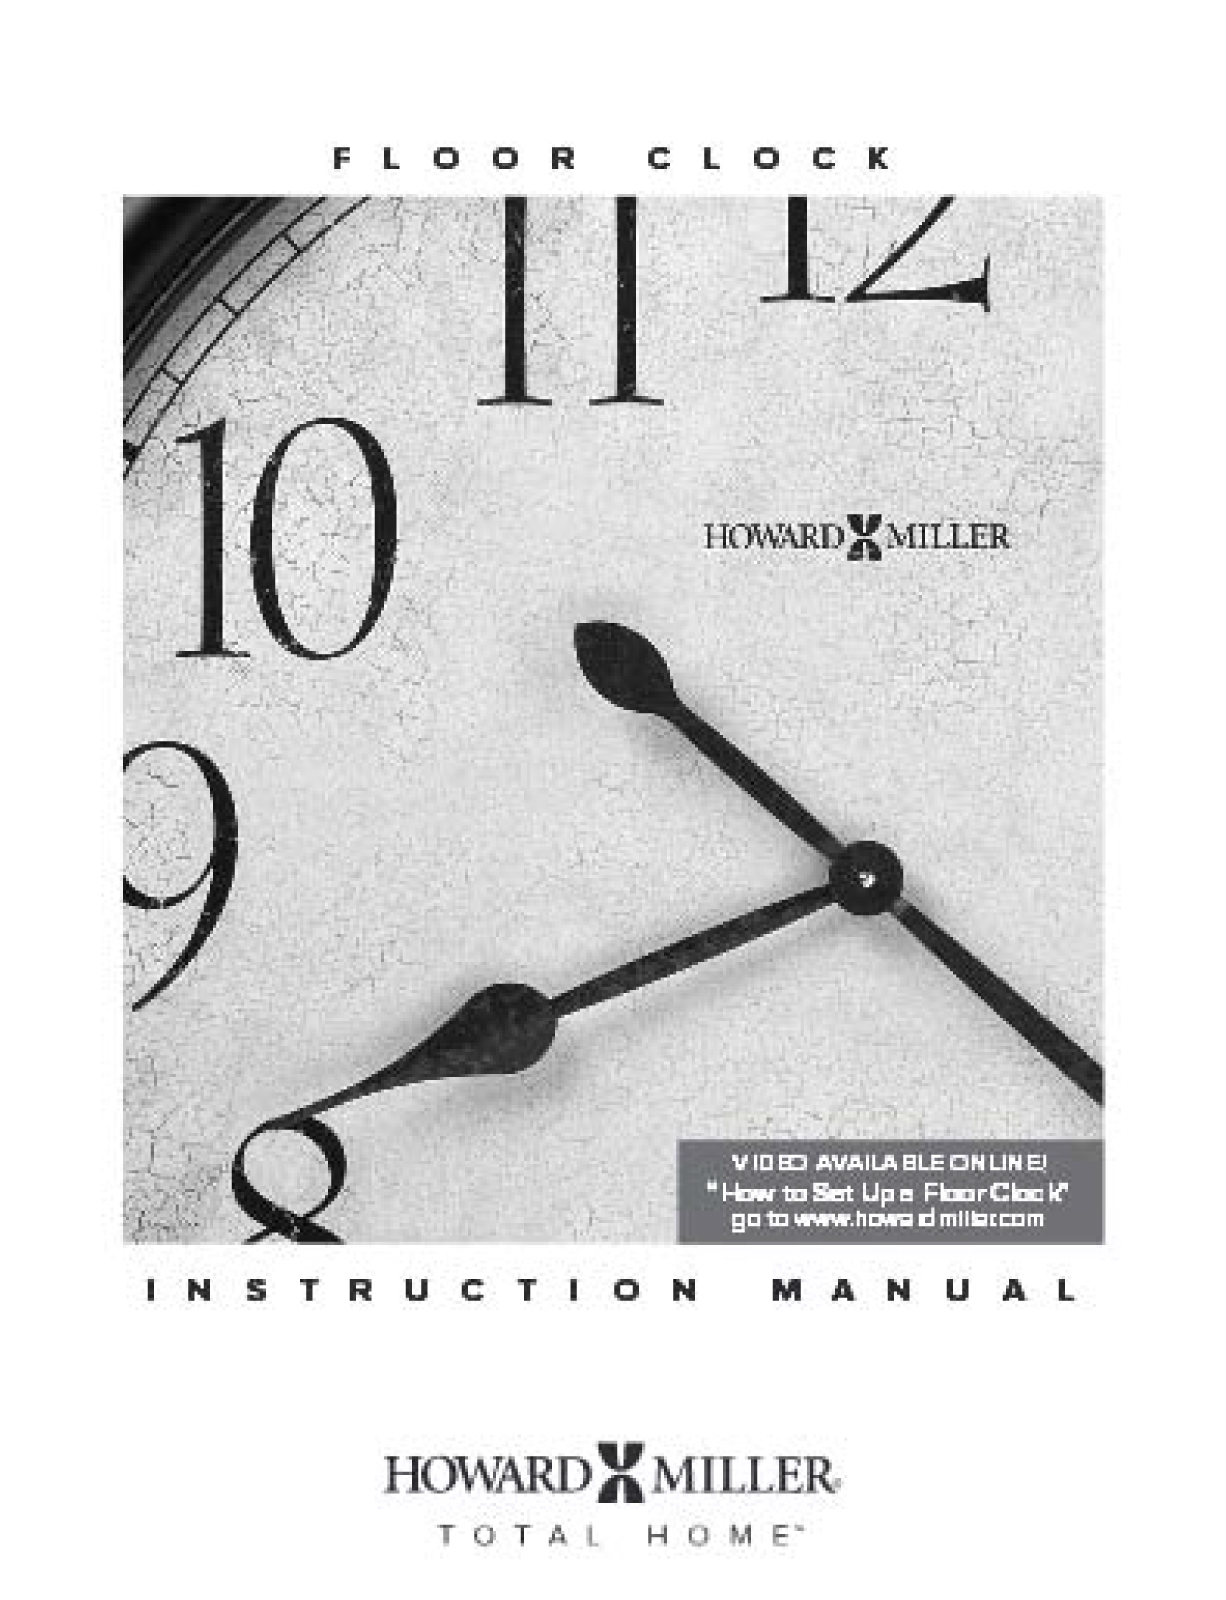 Grandfather clock manual